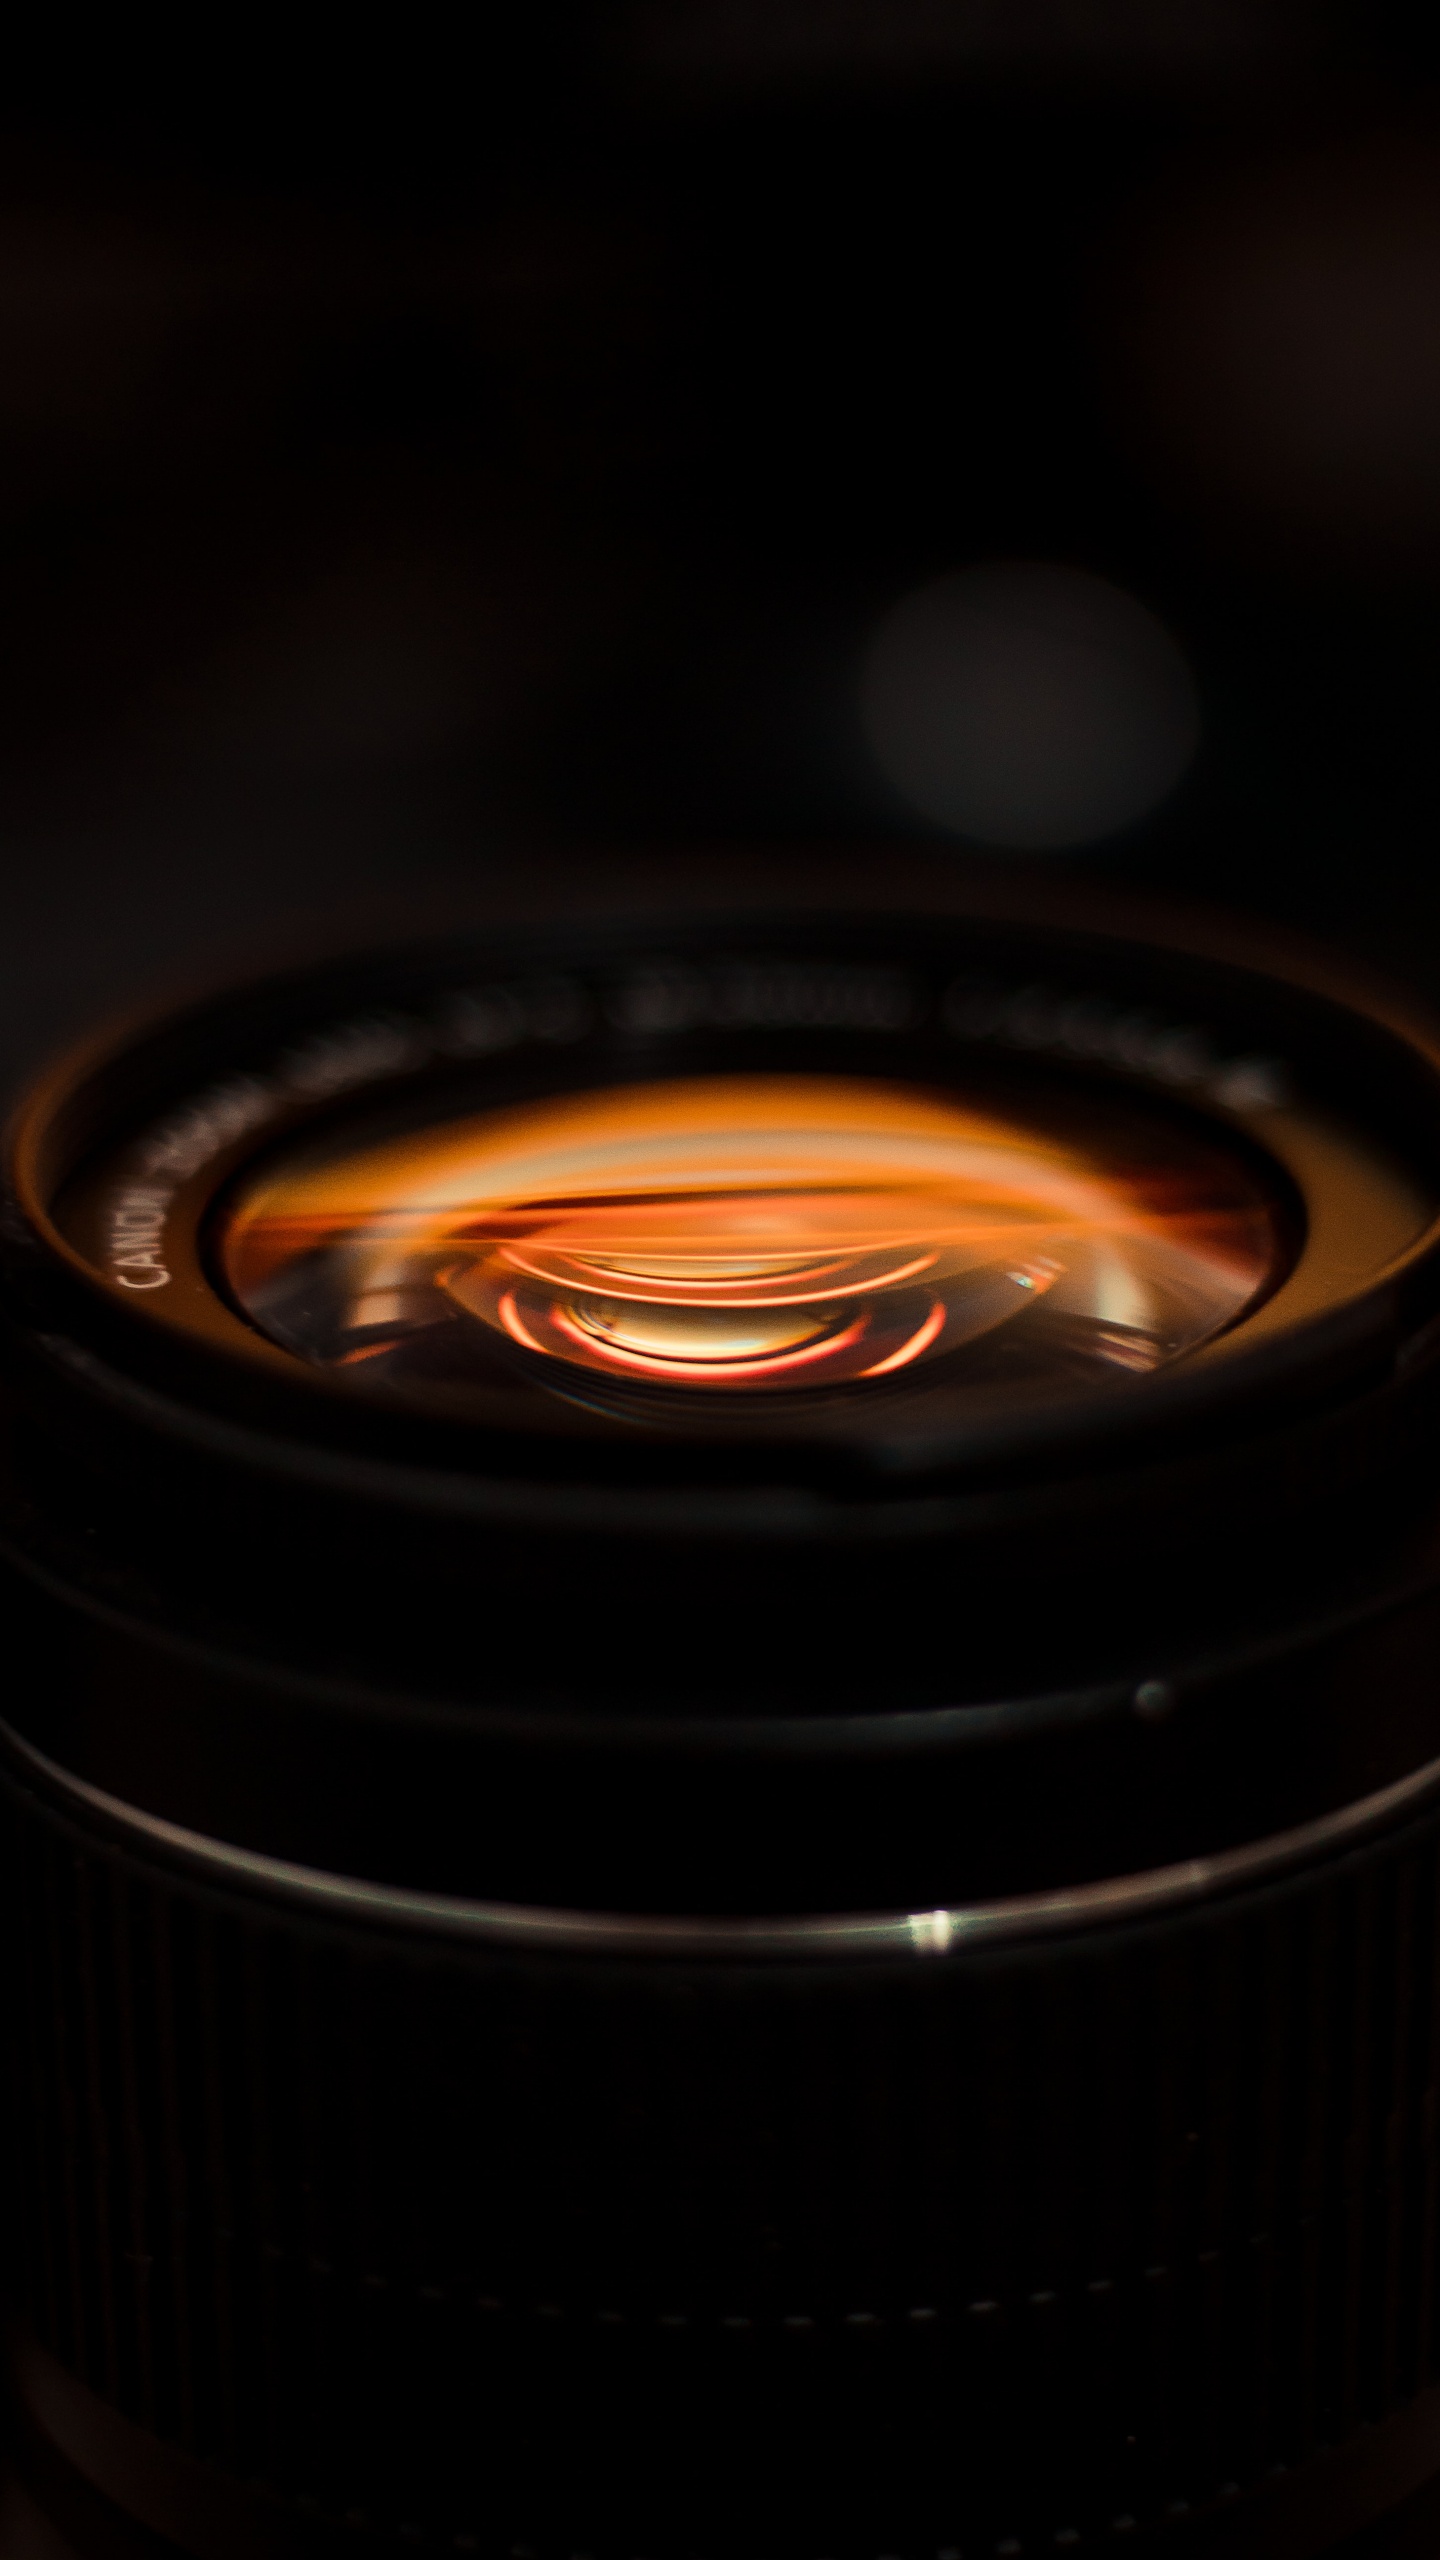 Black Camera Lens With Orange Light. Wallpaper in 1440x2560 Resolution